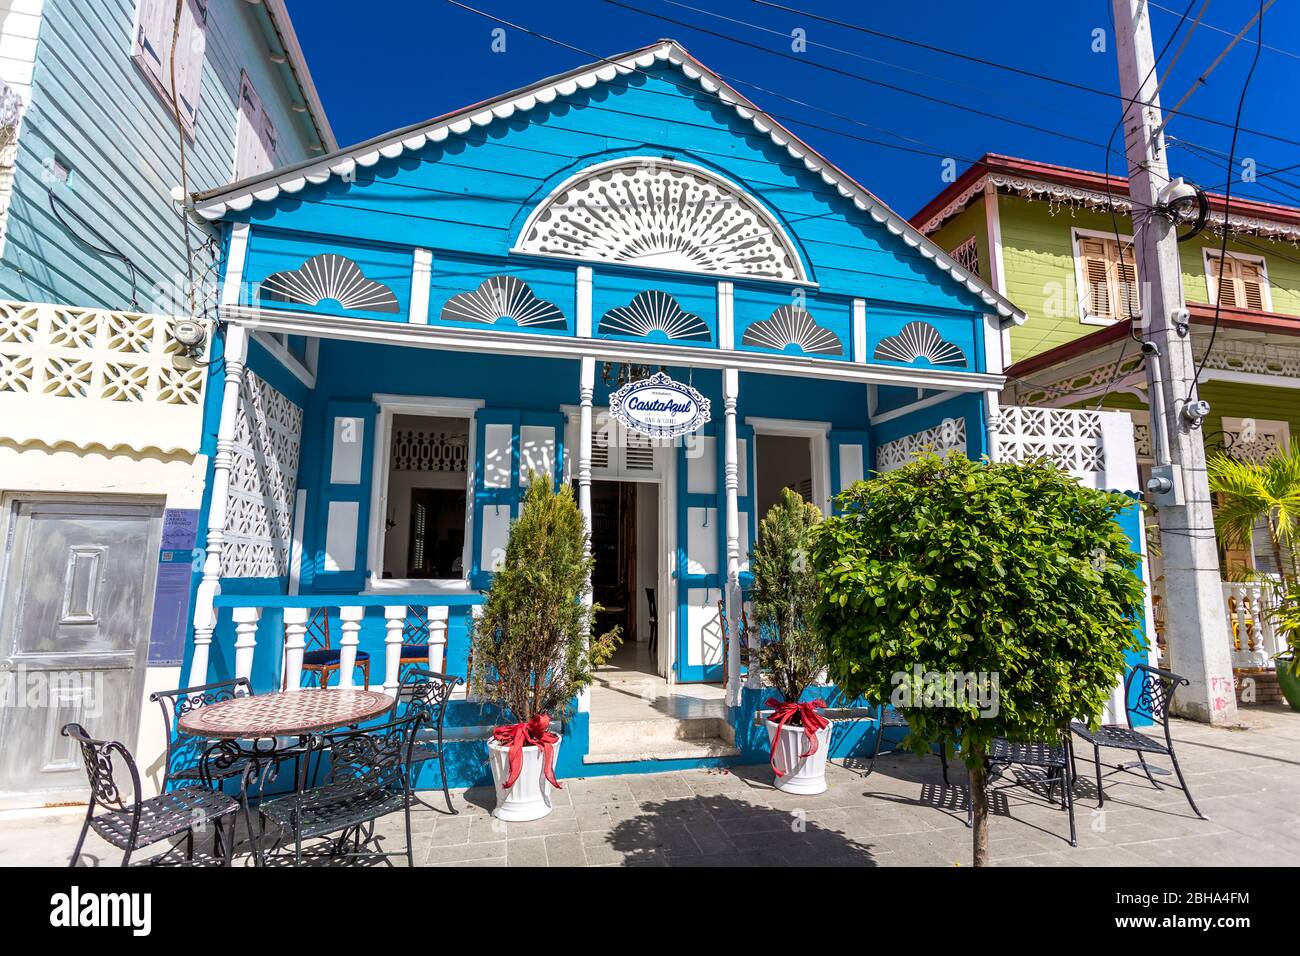 Restaurant Casita Azul, Viktorianische Häuser, Zentrum, Puerto Plata, Dominikanische Republik, Große Antillen, Karibik, Atlantik, Mittelamerika Stock Photo